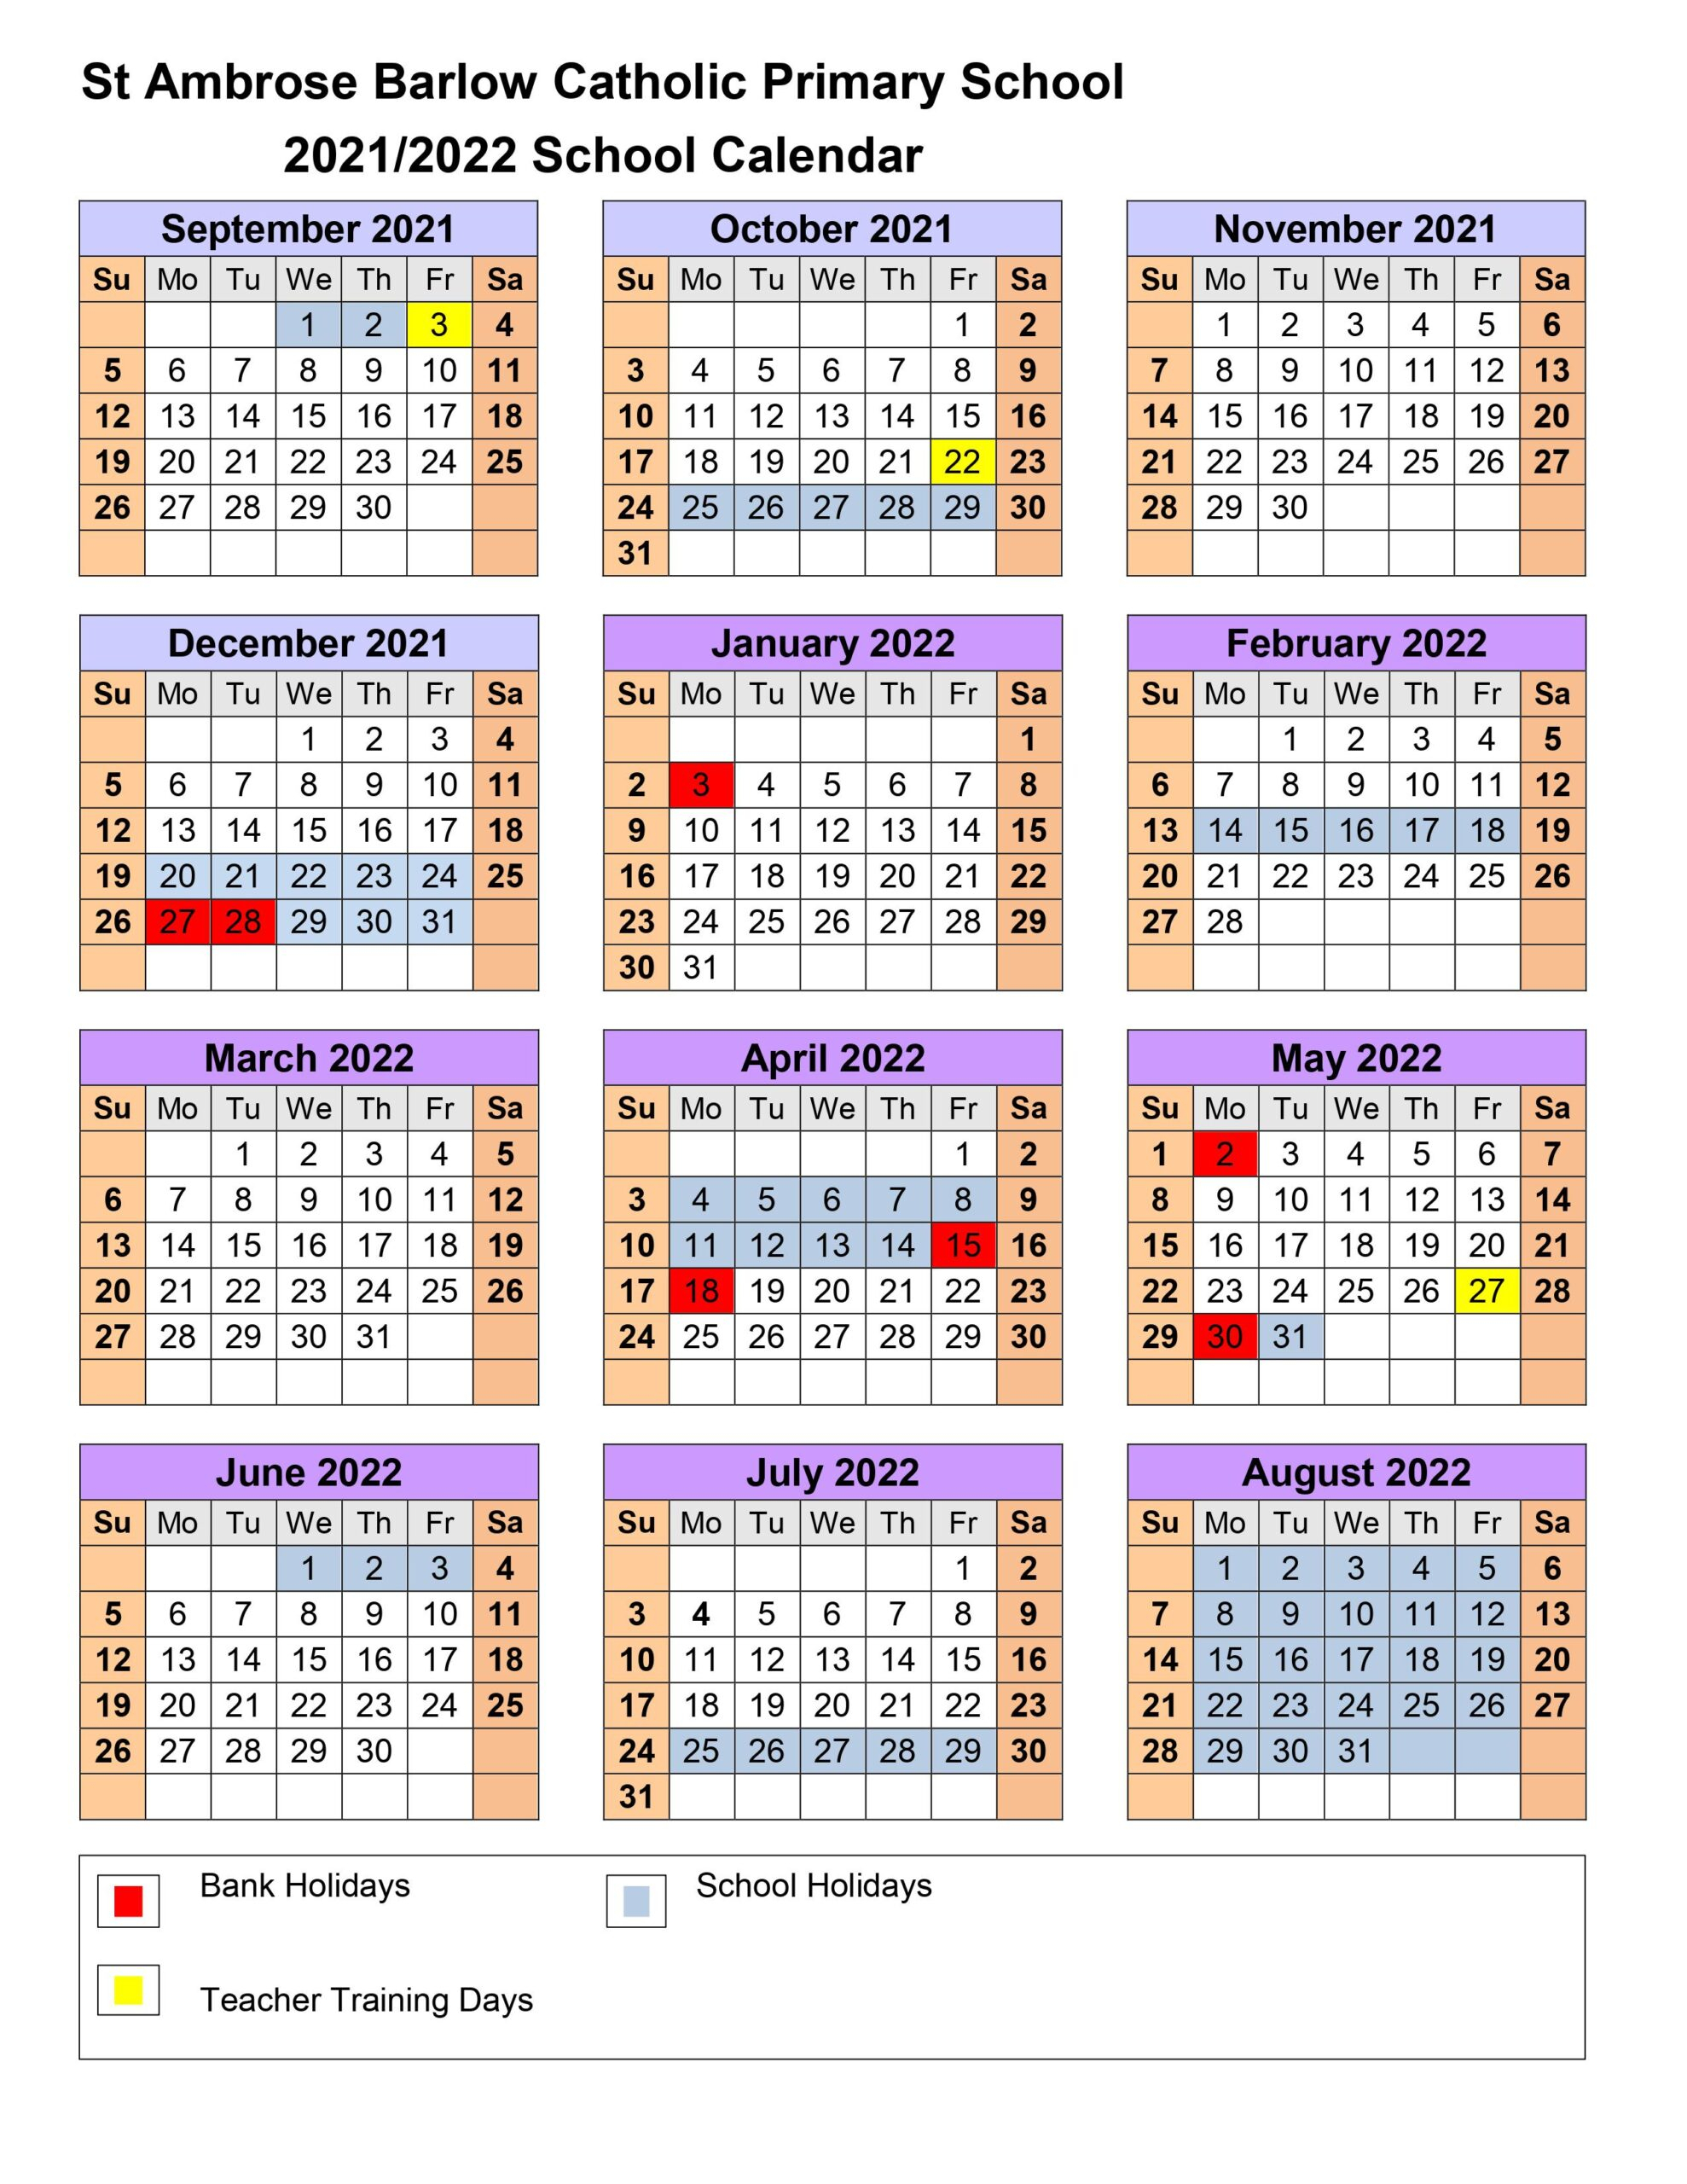 Calendar 2021 2022 - St Ambrose Barlow Catholic Primary School